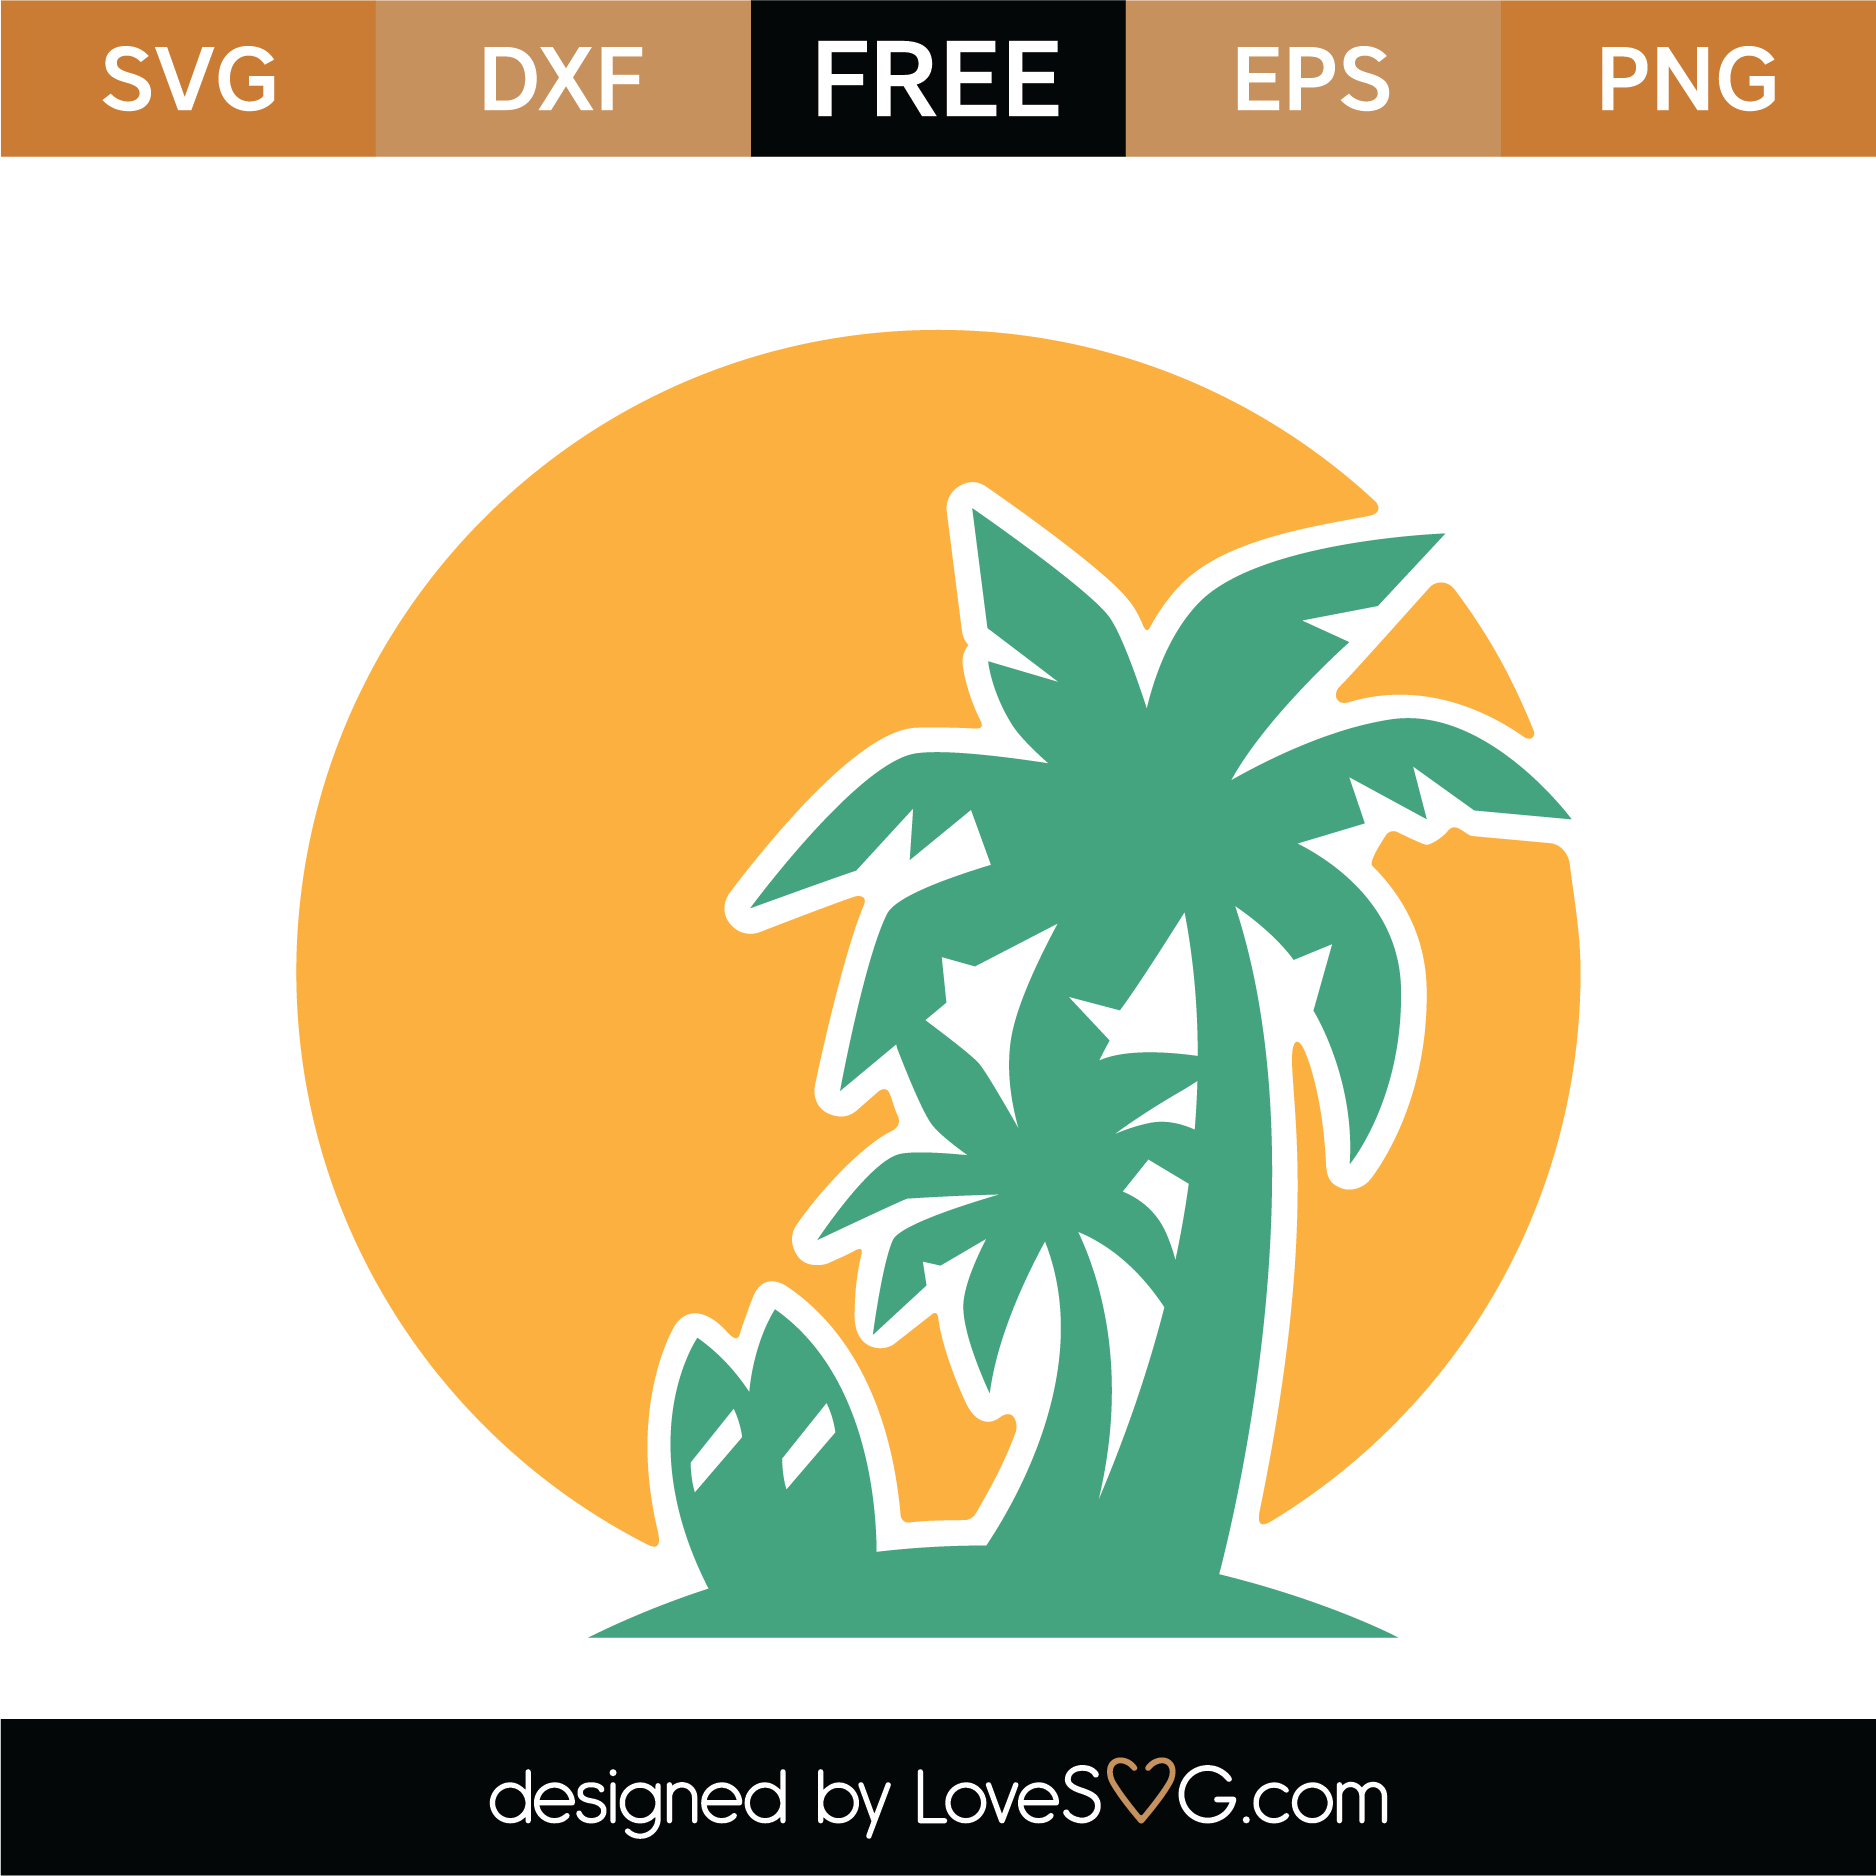 Download Free Palm Trees SVG Cut File | Lovesvg.com